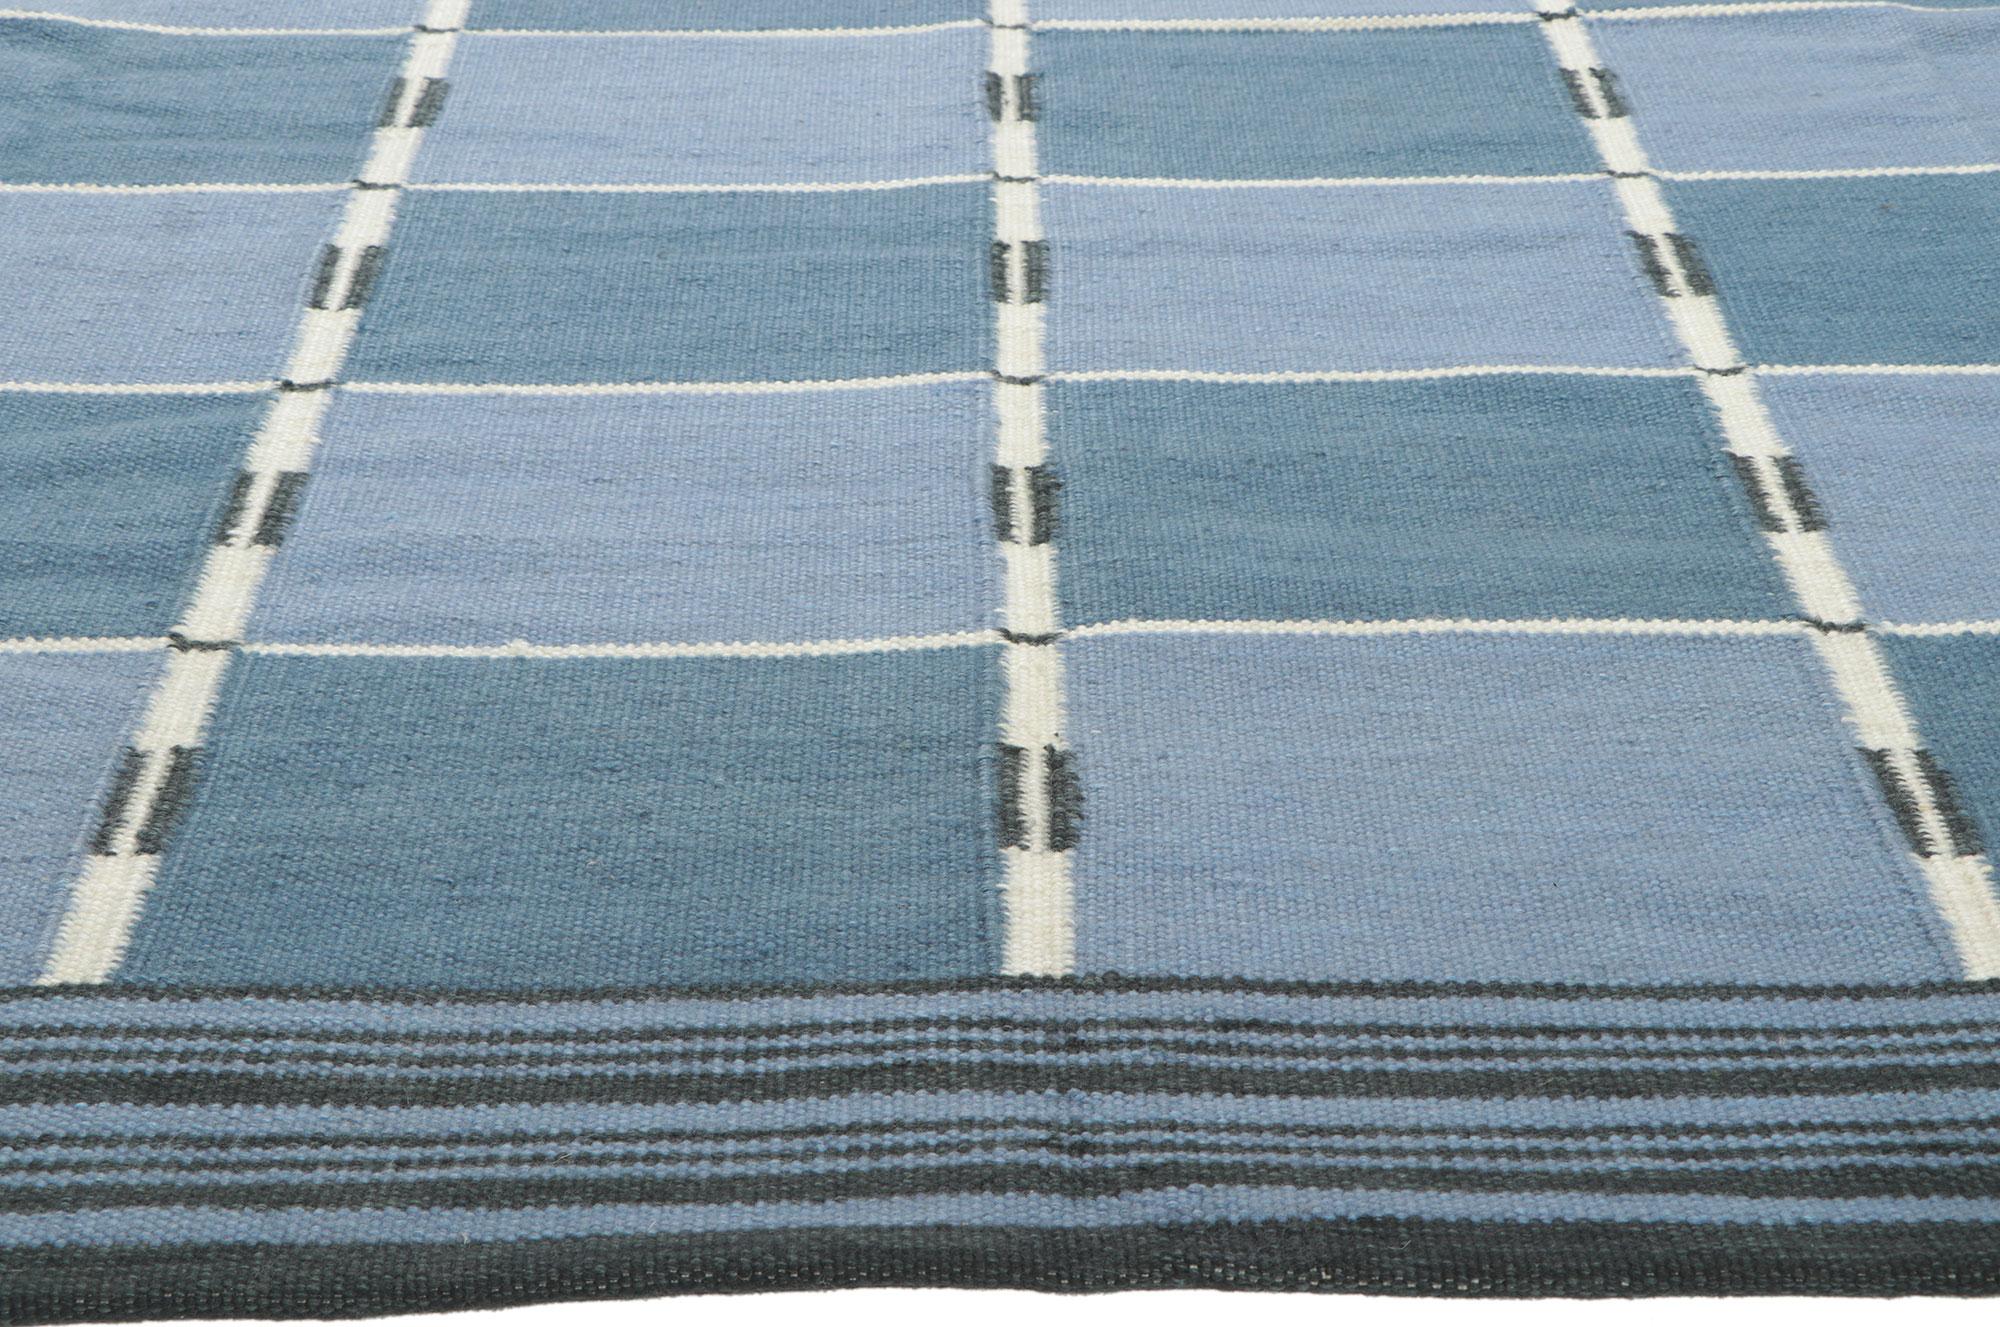 Skandinavisch-moderner schwedisch inspirierter Kilim-Teppich, Blått Rutmönster (Handgewebt) im Angebot